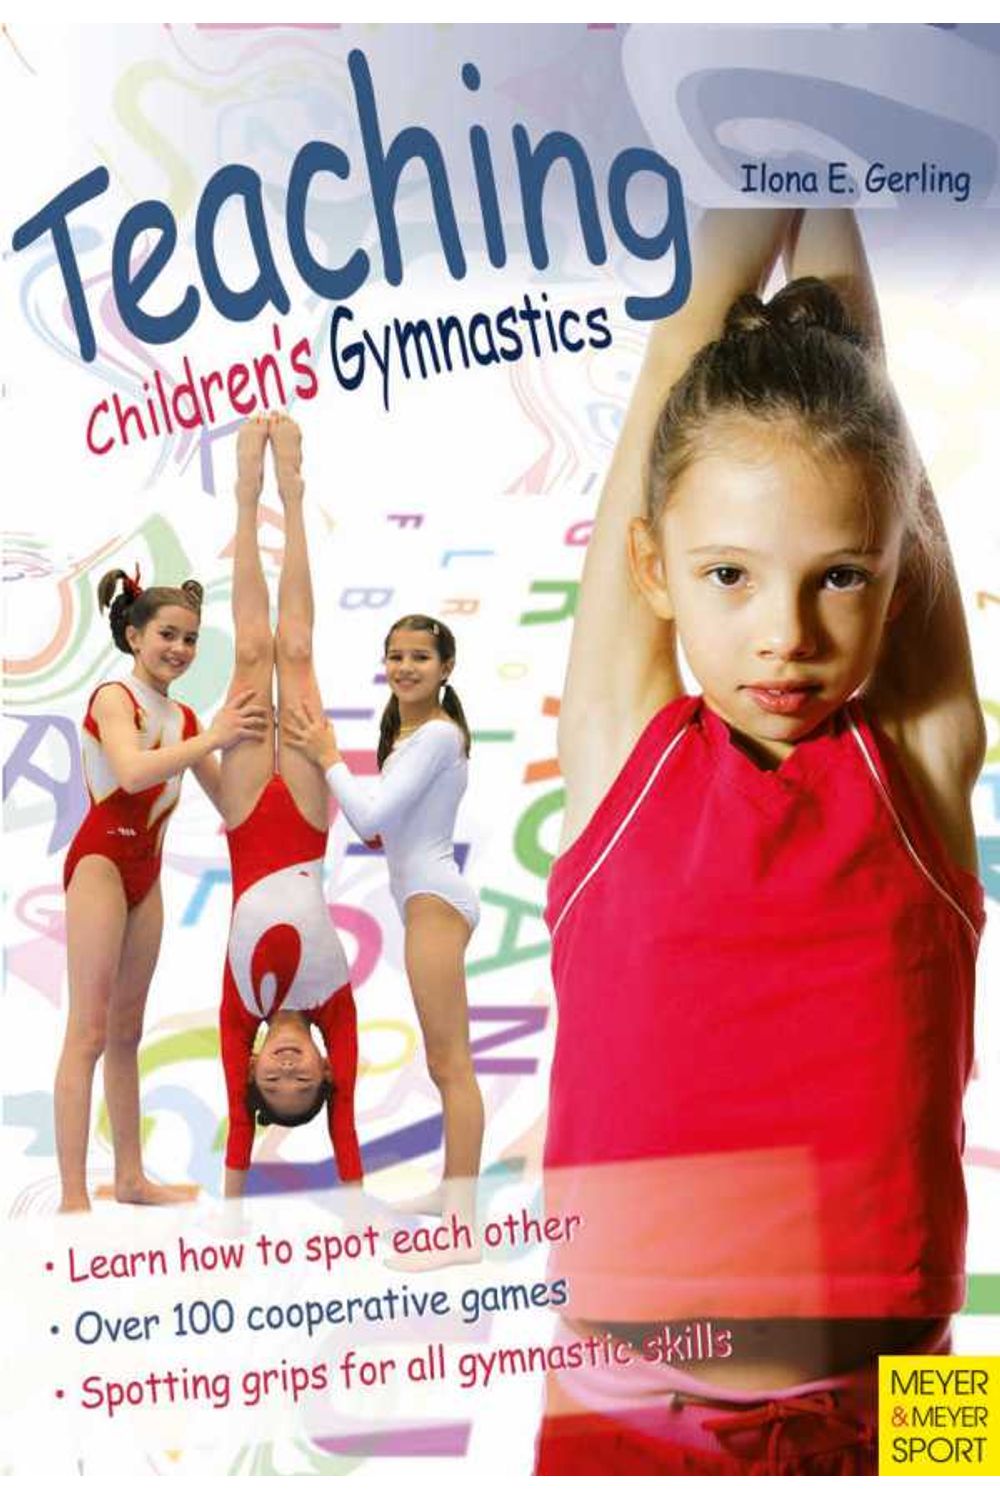 bw-teaching-childrens-gymnastics-meyer-meyer-sport-9781841269375